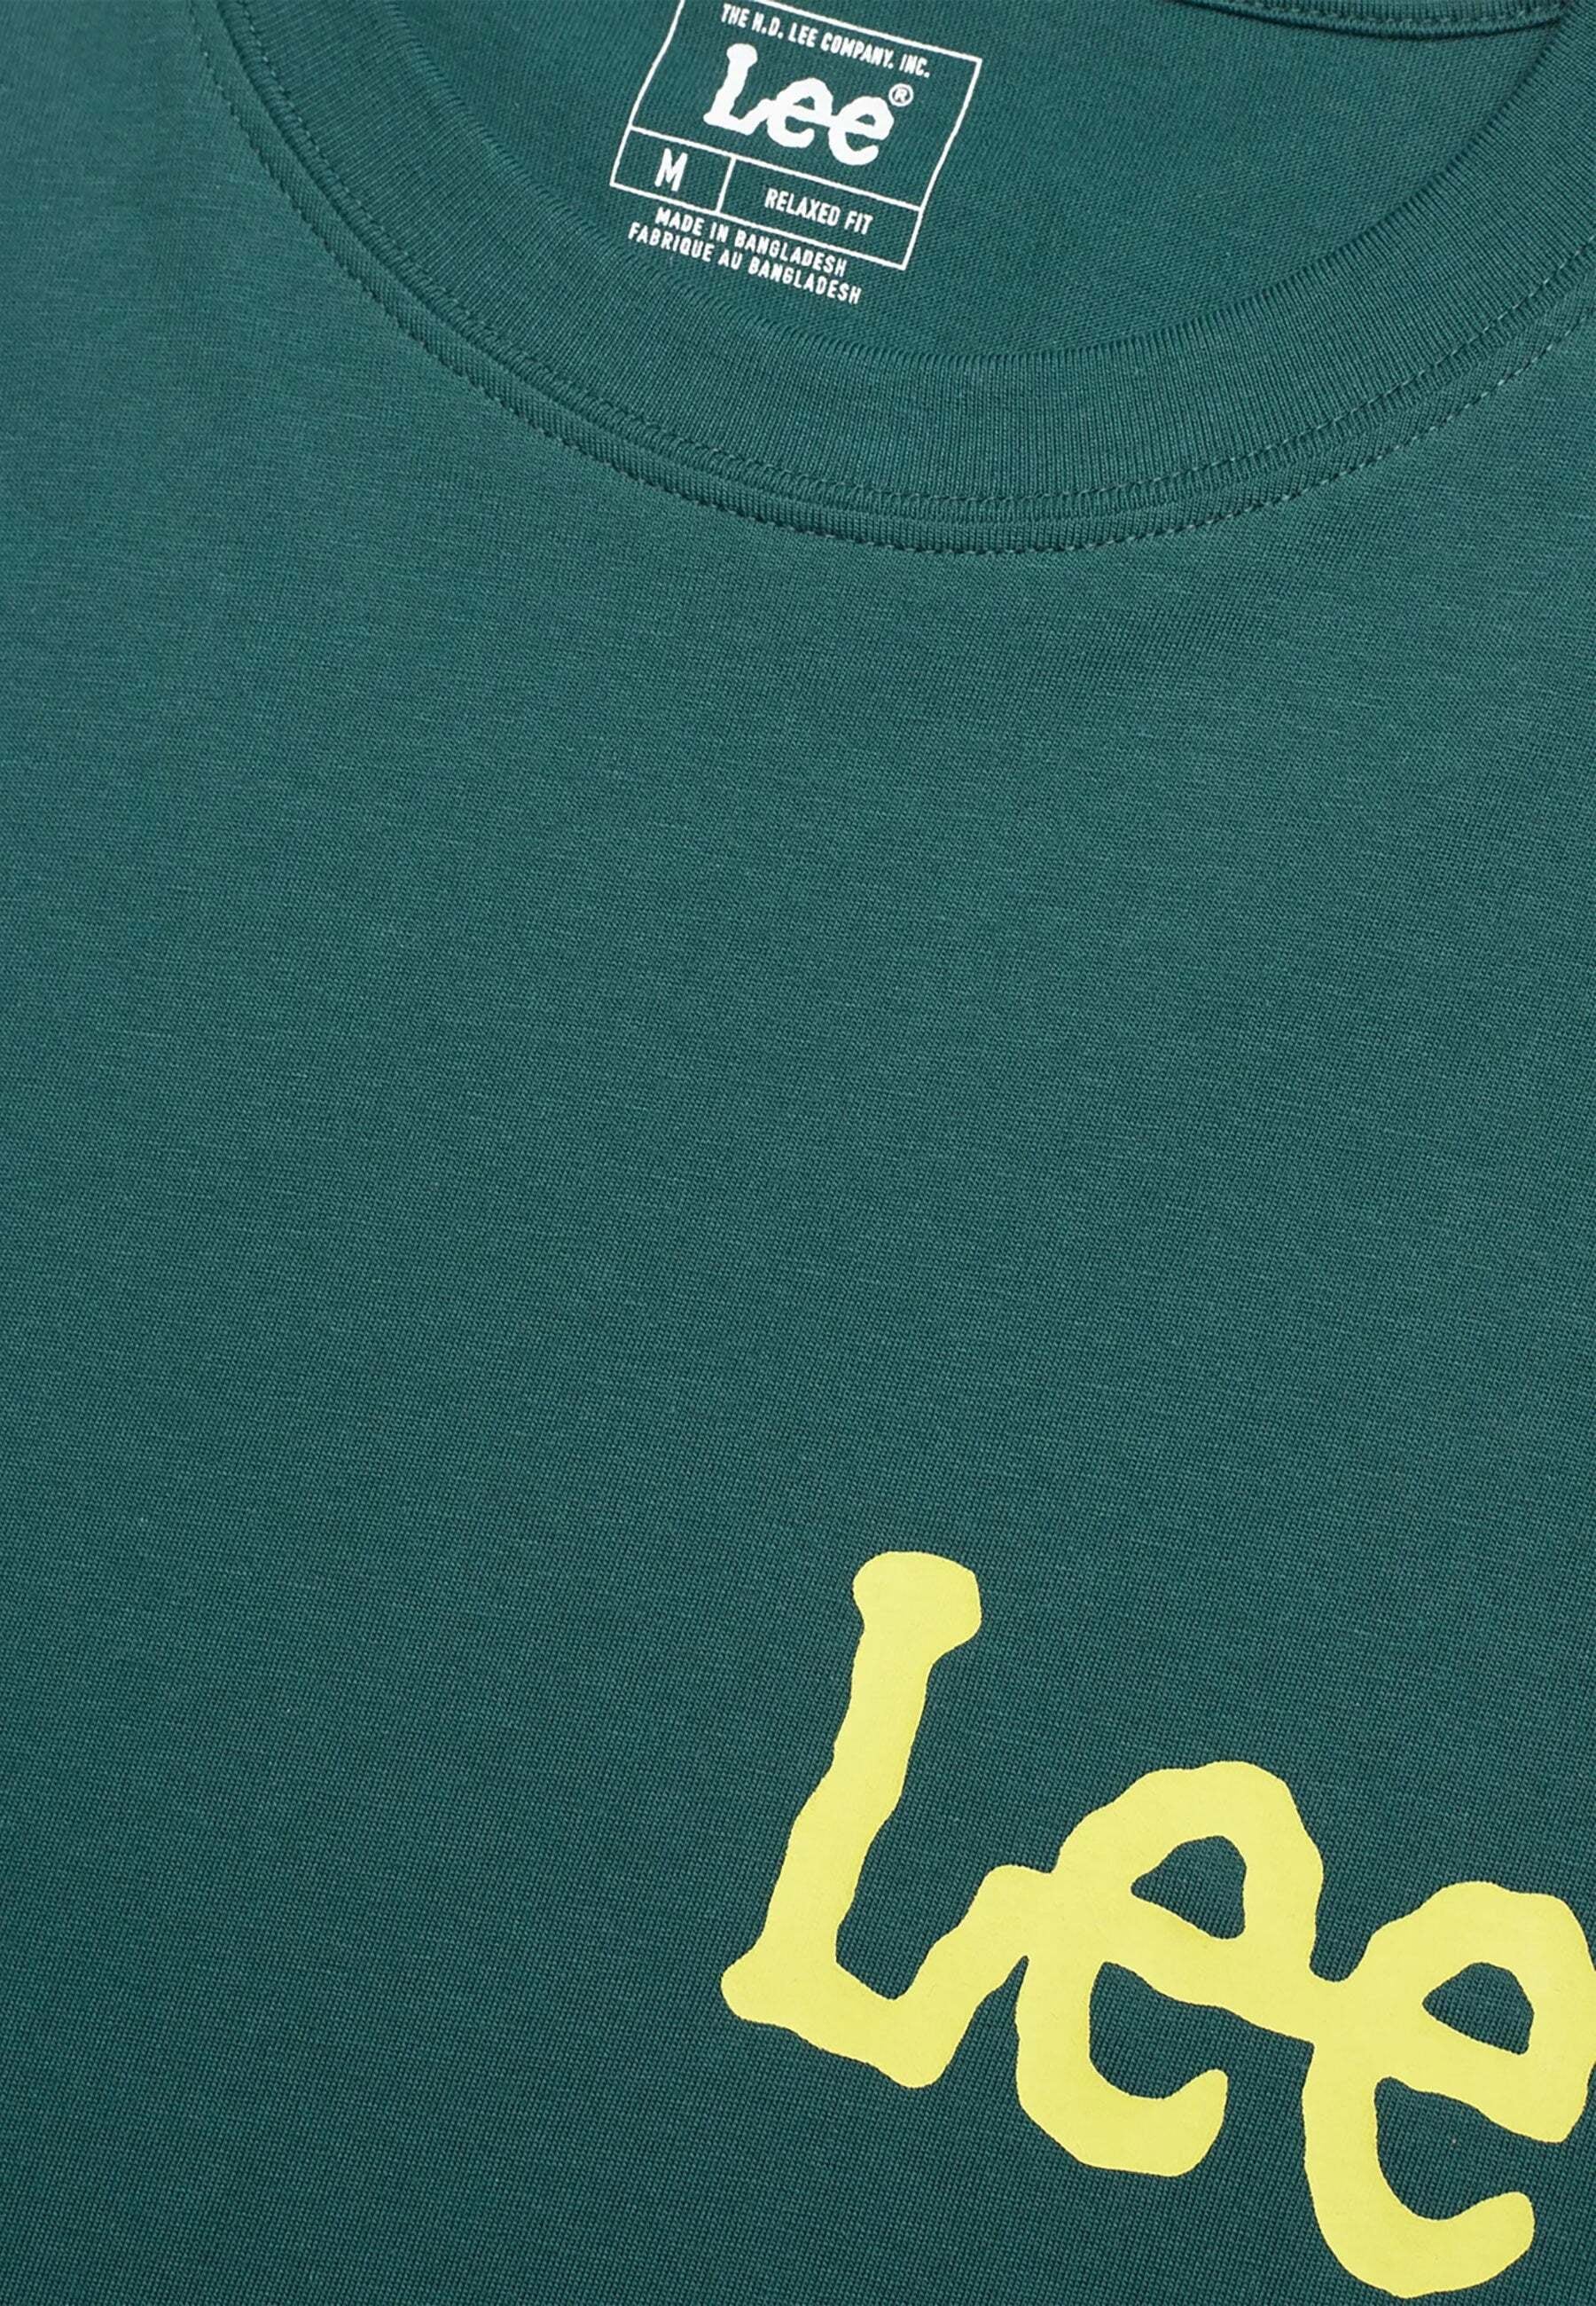 Lee® T-Shirt »LEE T-Shirts Camp Tee«